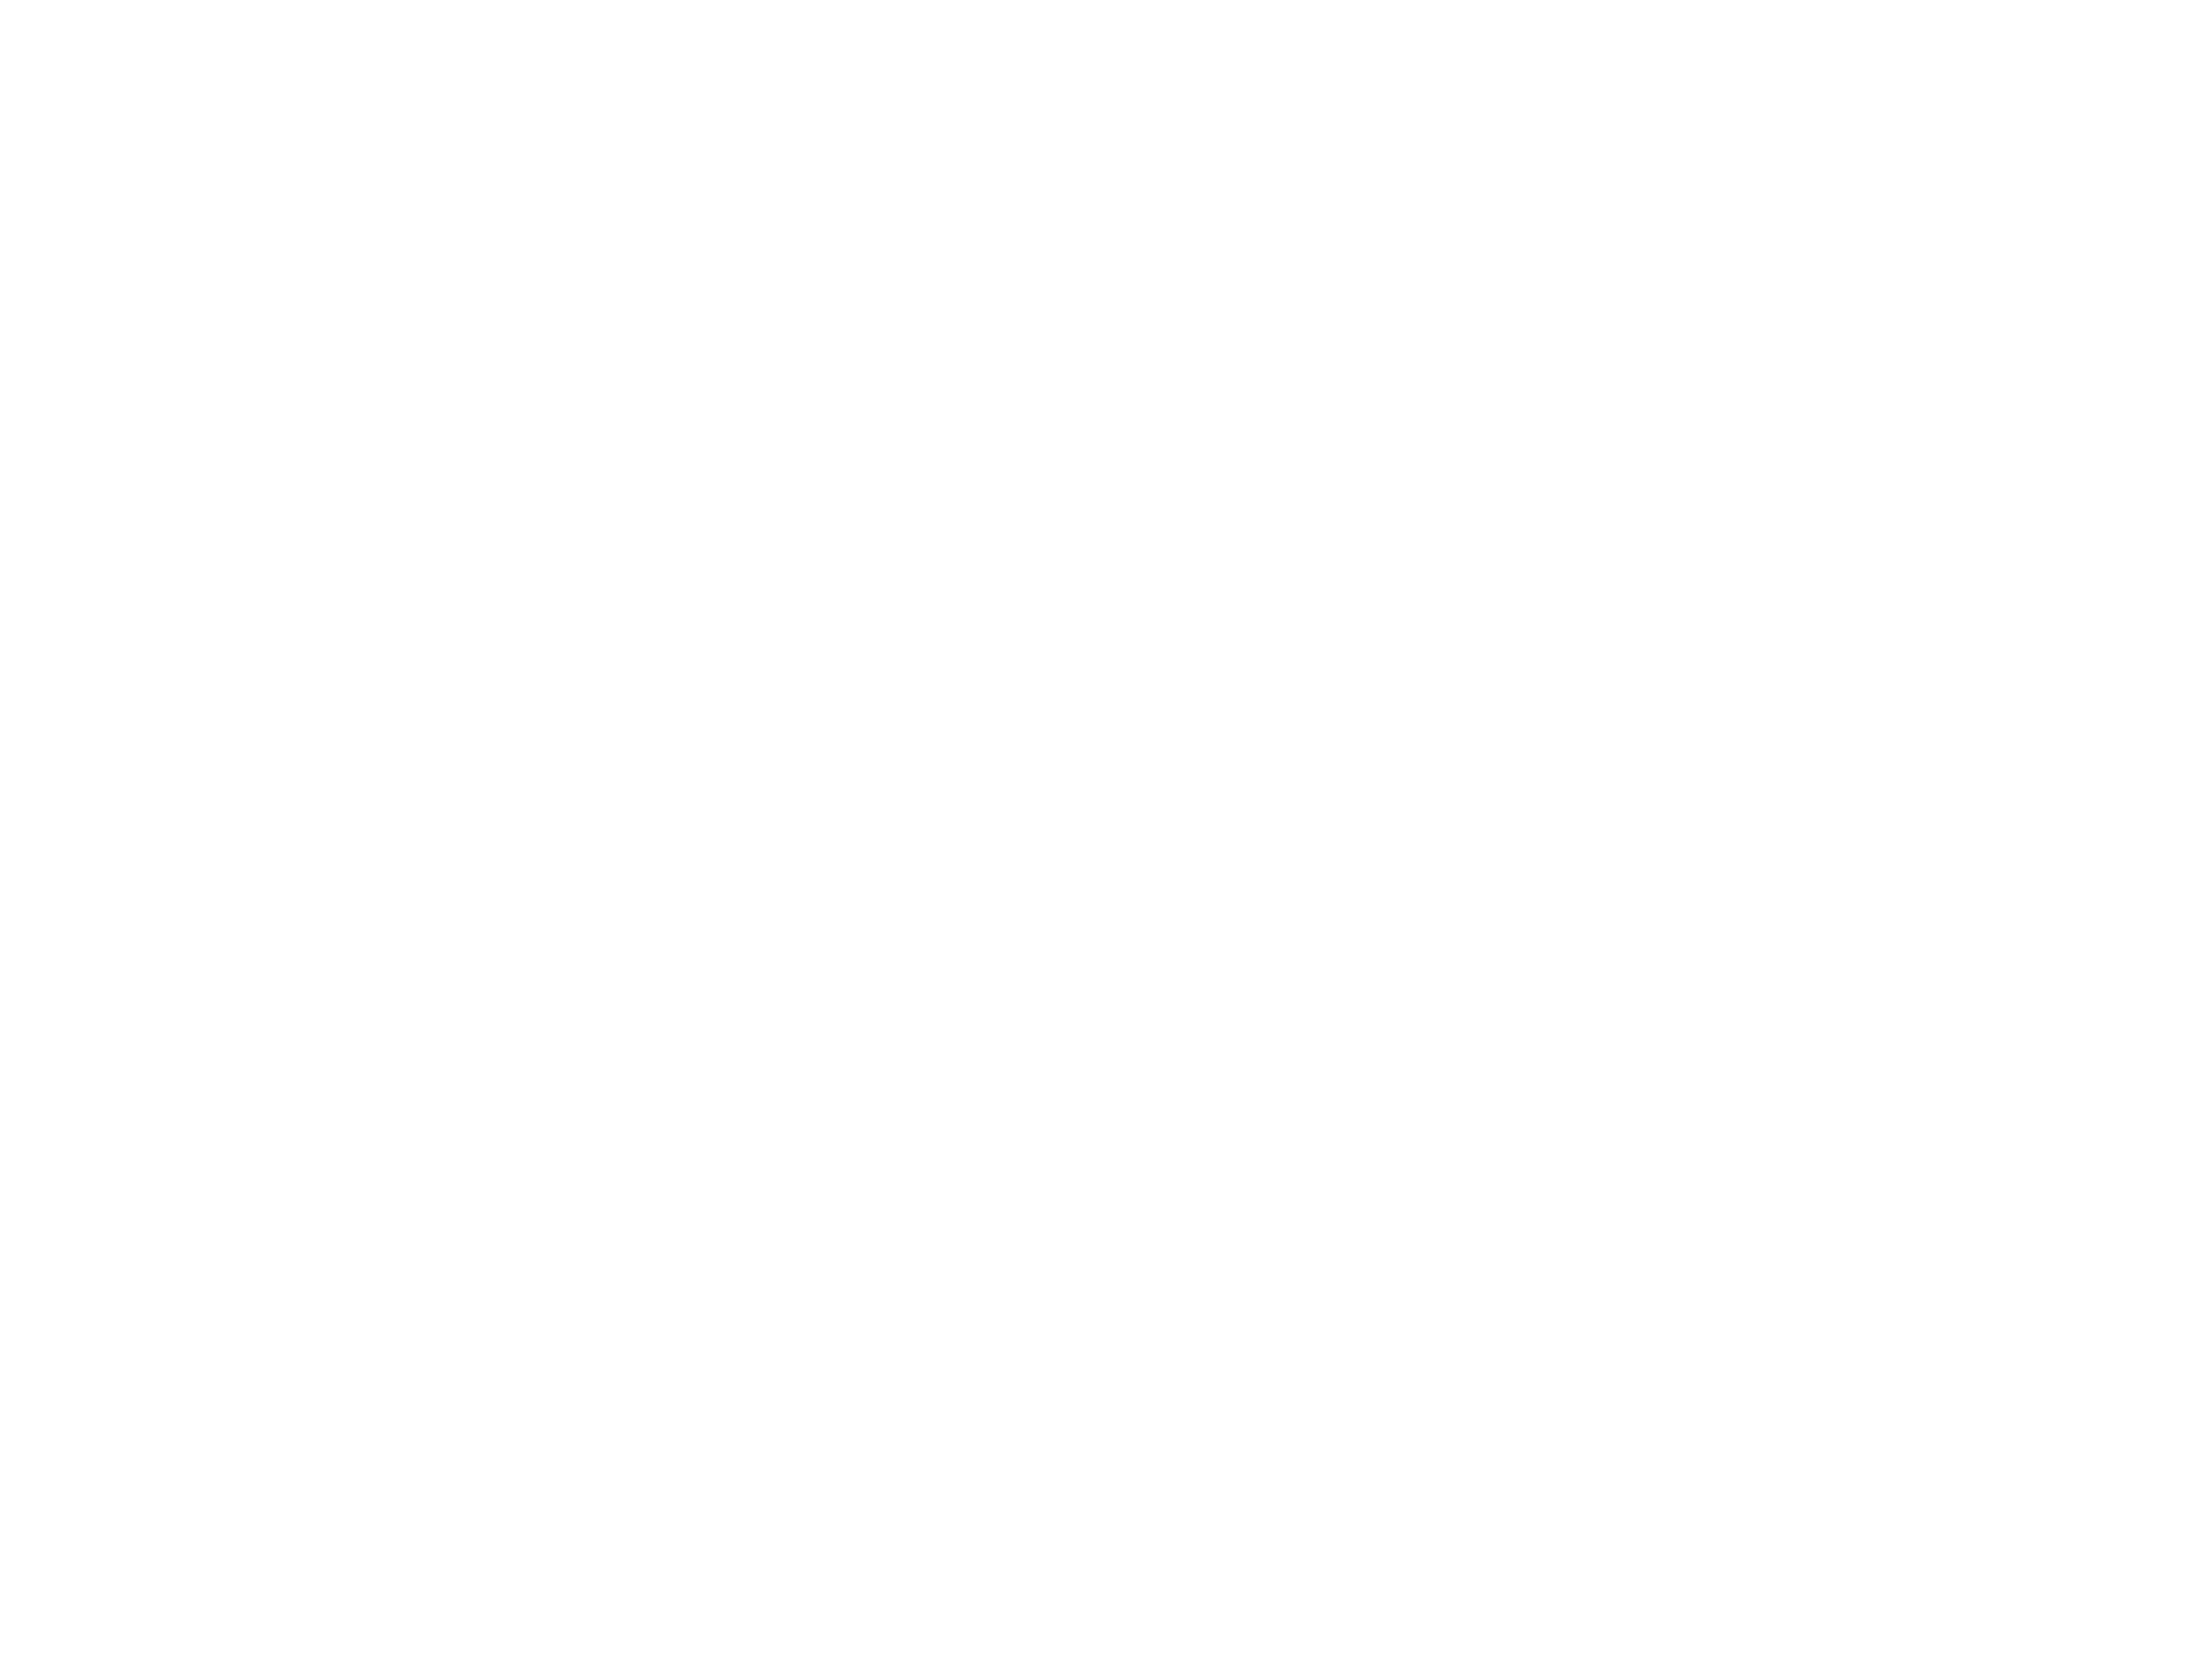 Senne-Bikers